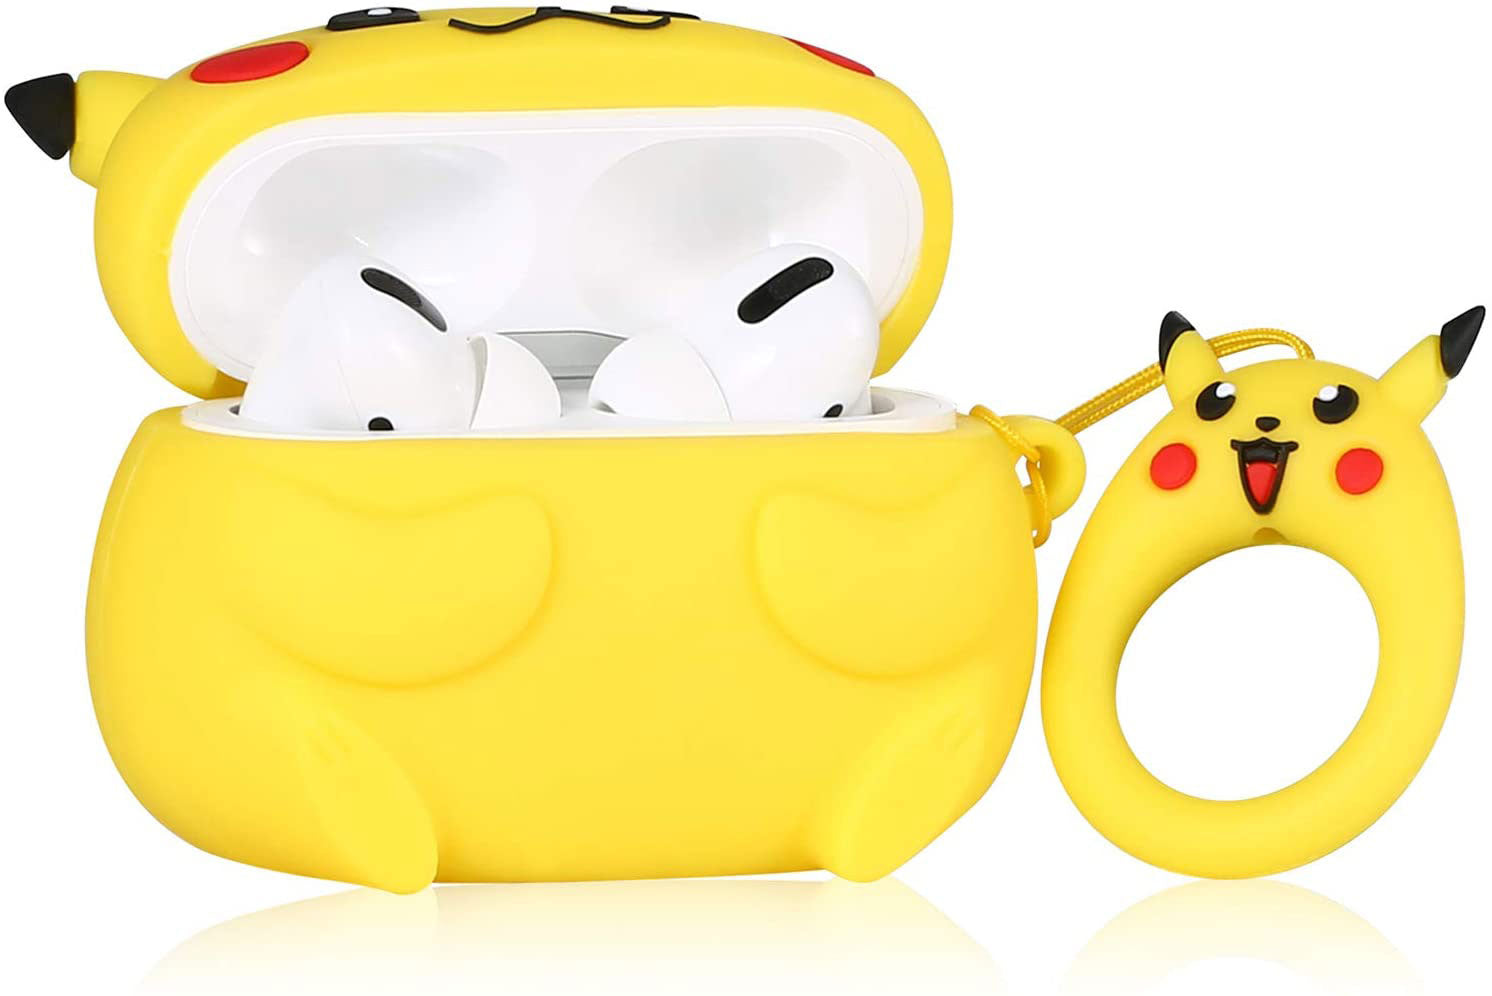 Pikachu Pokemon Airpods Pro Case